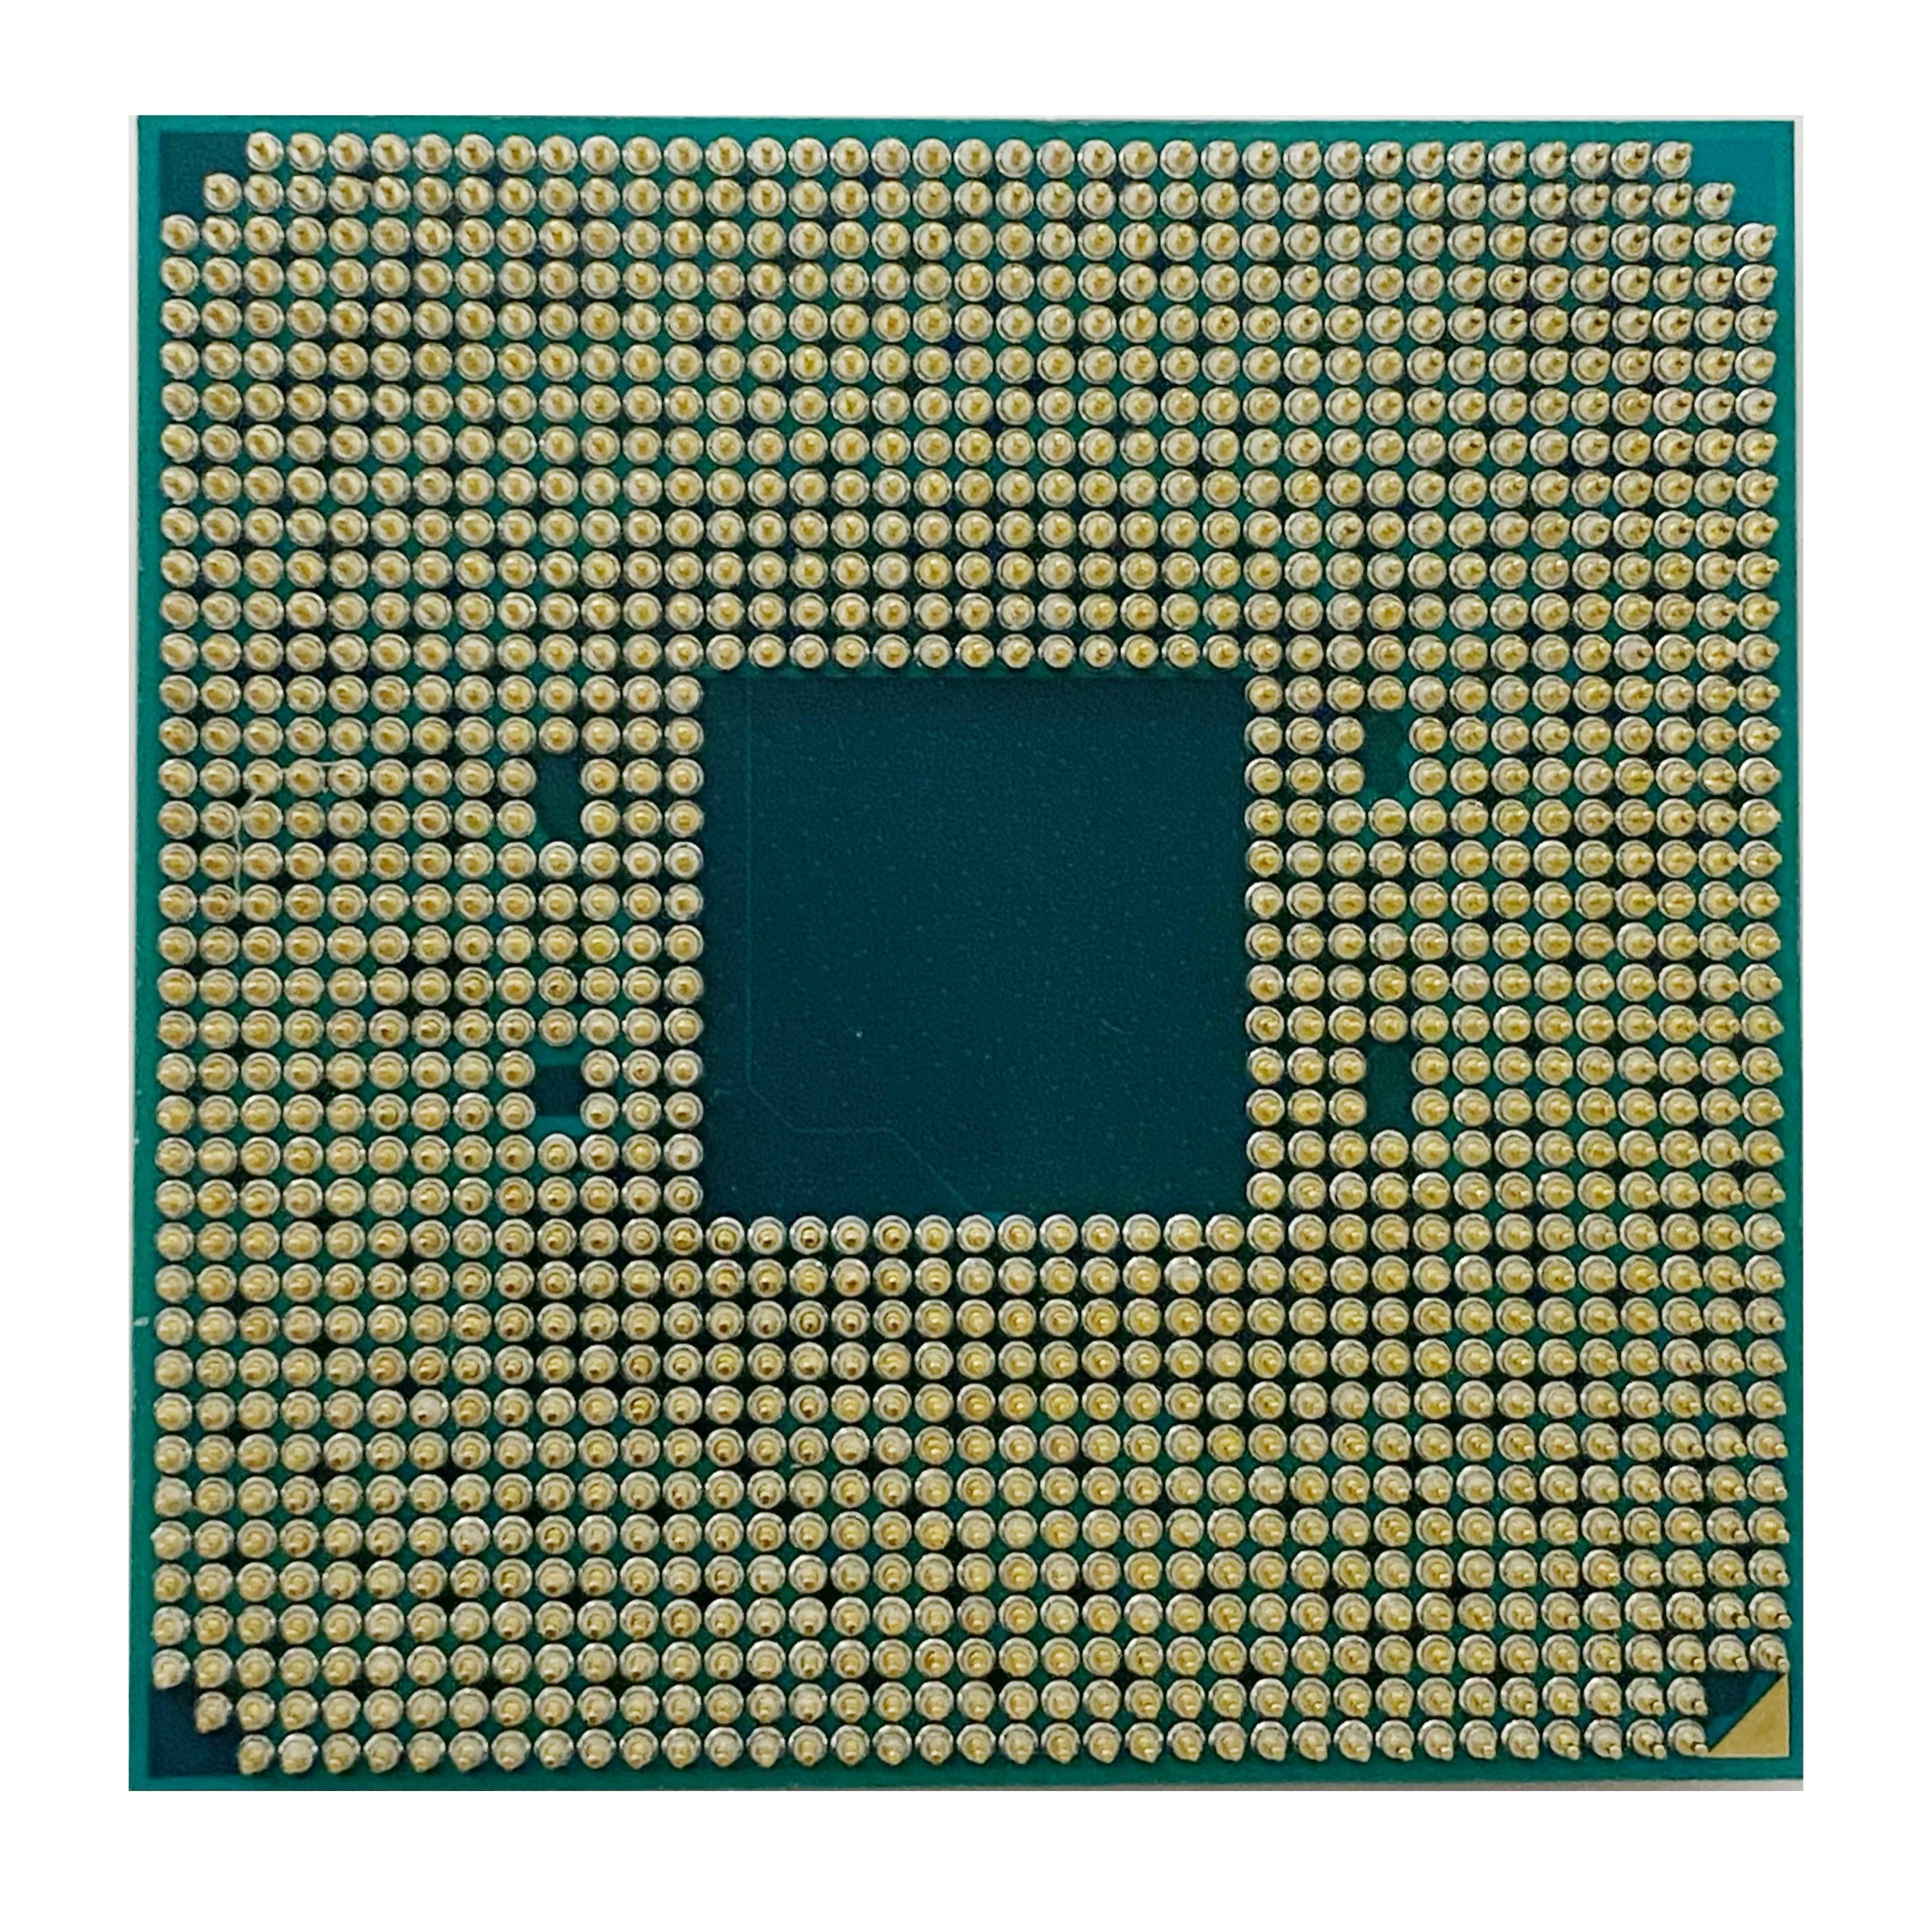 AMD ryzen 5 1500X R–5 1500X R5-1500X 3.5 ghz quad-core eight-core CPU Időréscsatoló L3=16M 65W YD150XBBM4GAE socken AM4